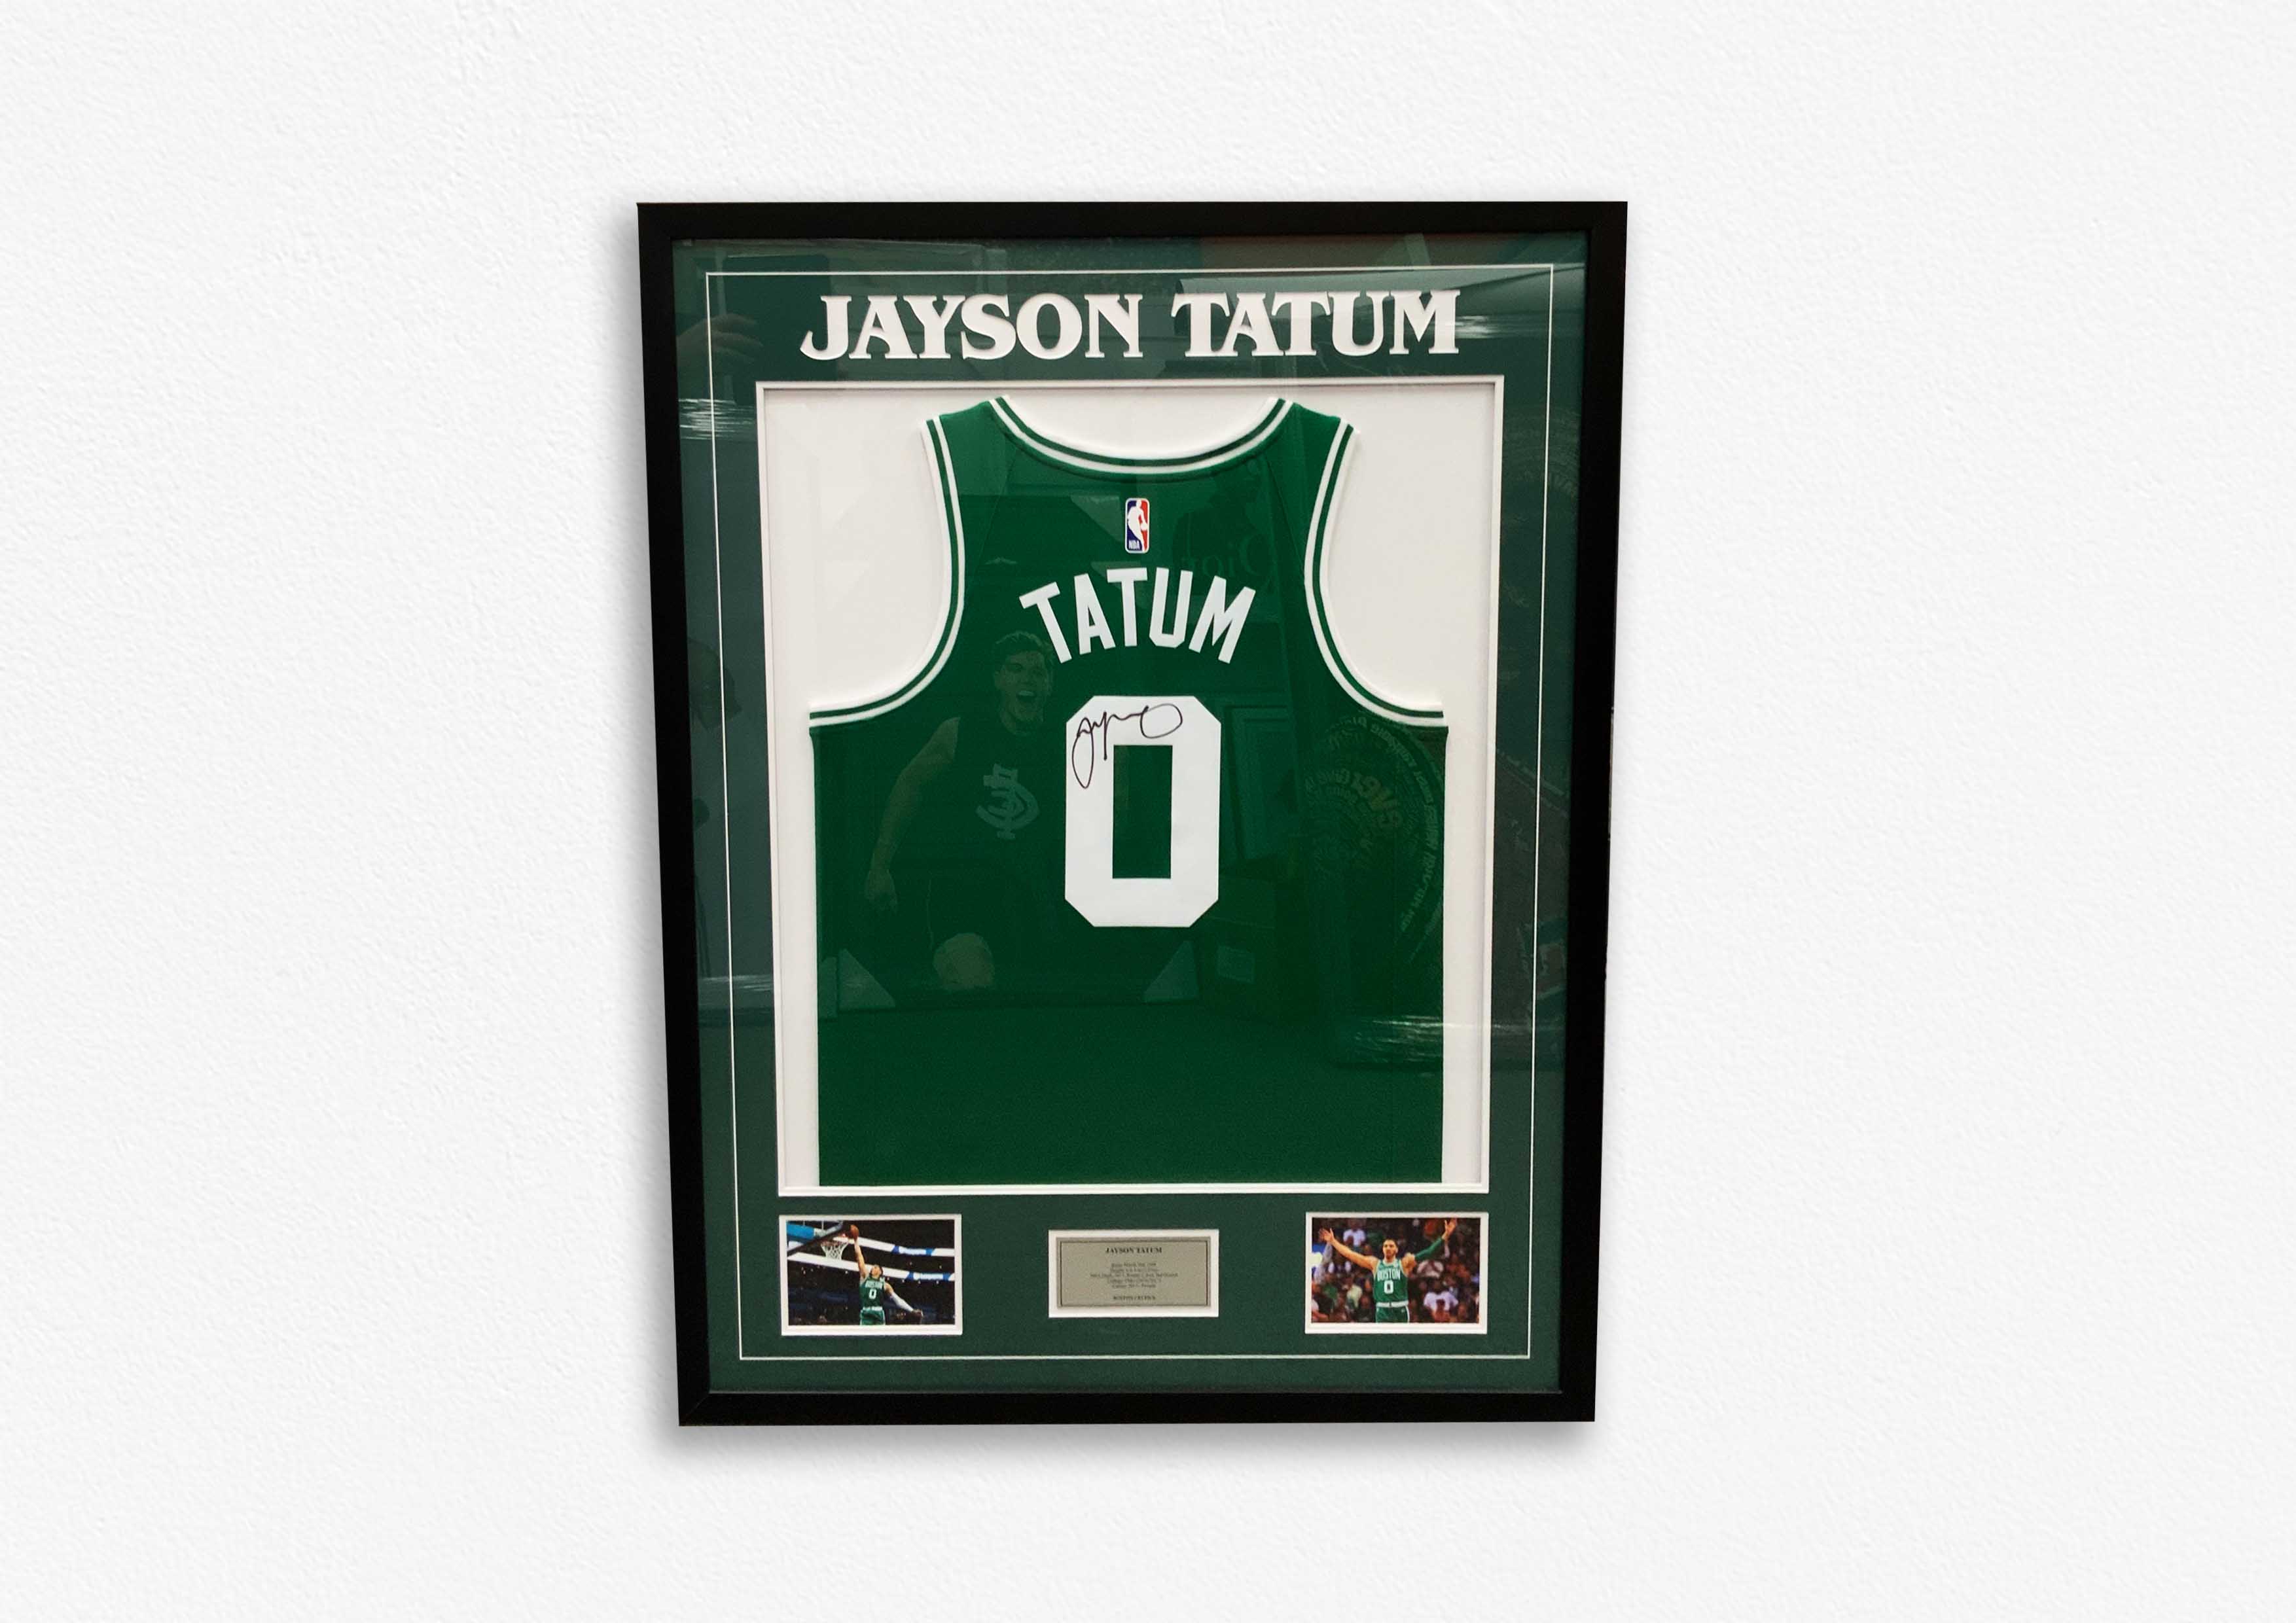 jayson tatum autographed jersey framed